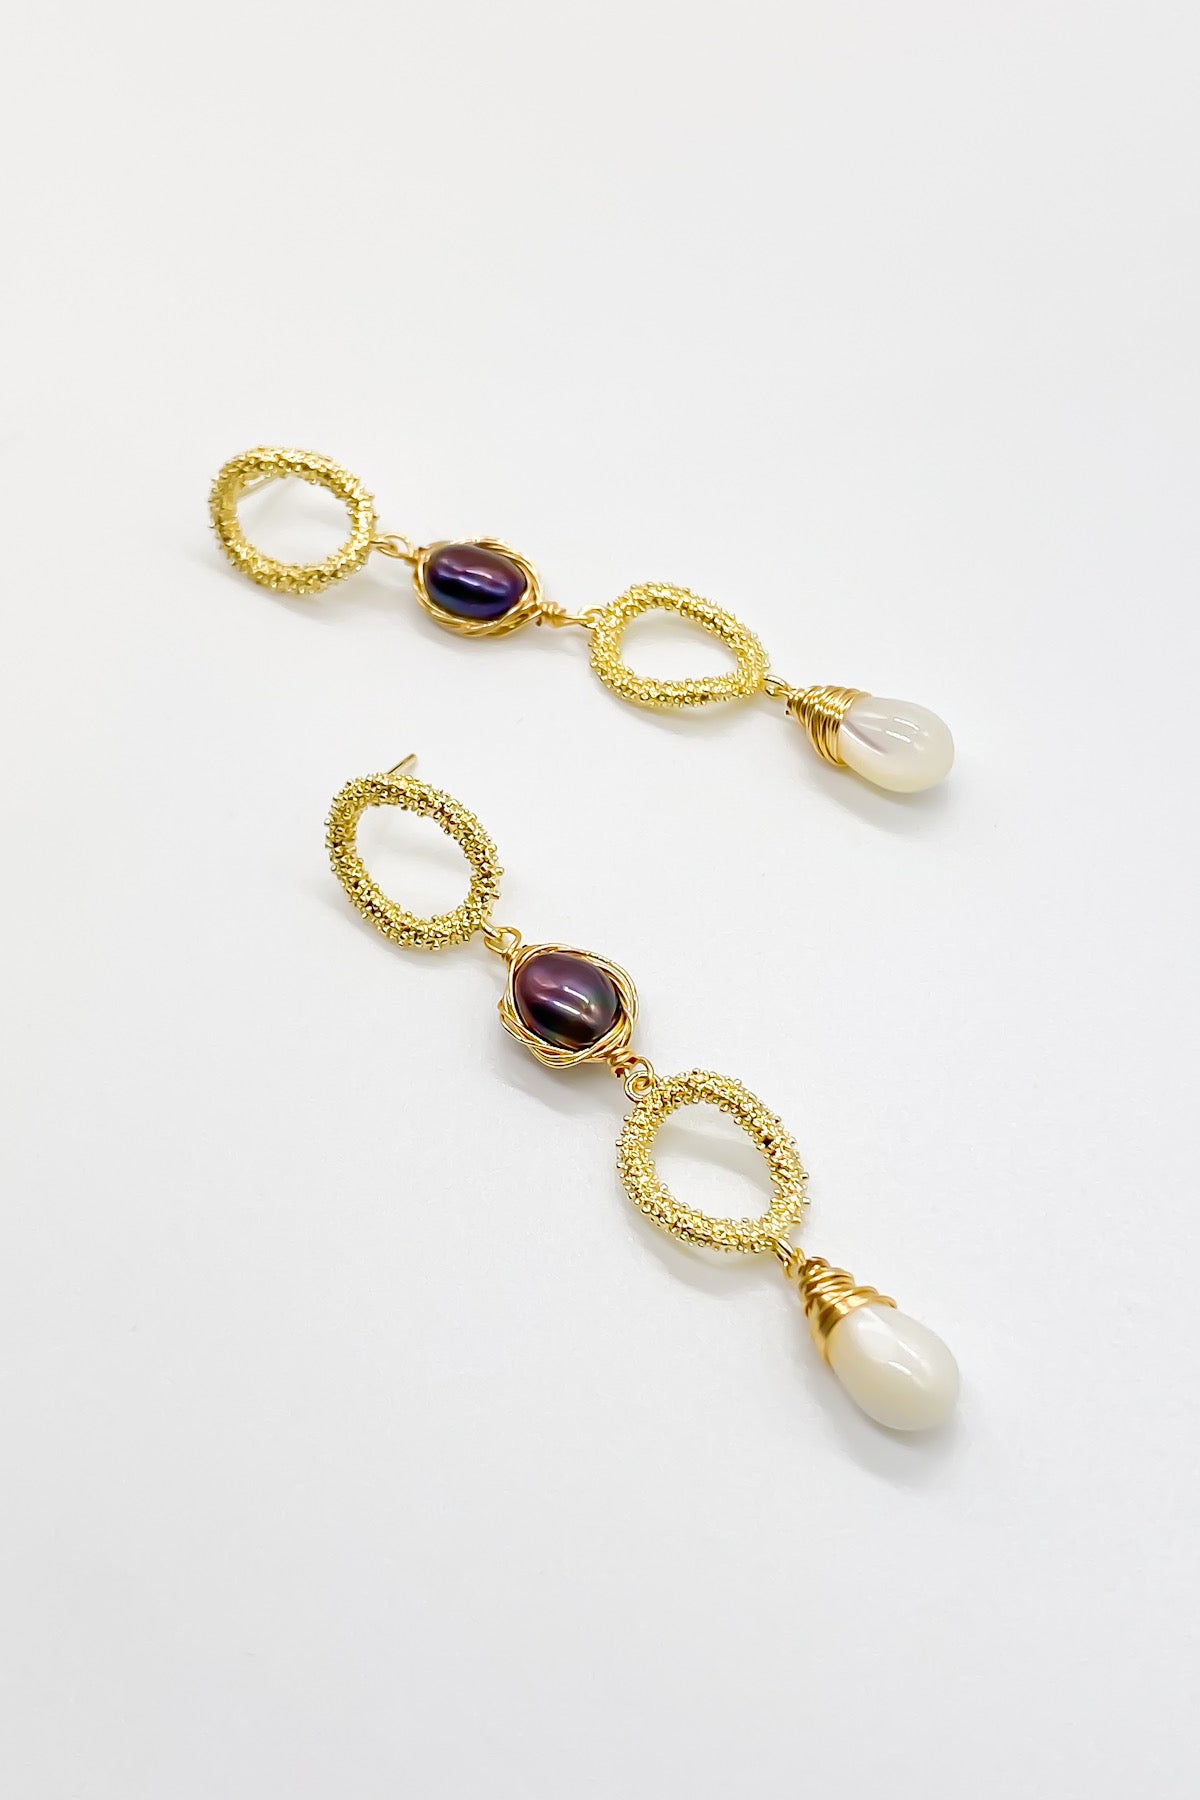 SKYE San Francisco Shop Chic Modern Elegant Classy Women Jewelry French Parisian Minimalist Priscille Gold Pearl Drop Earrings 2